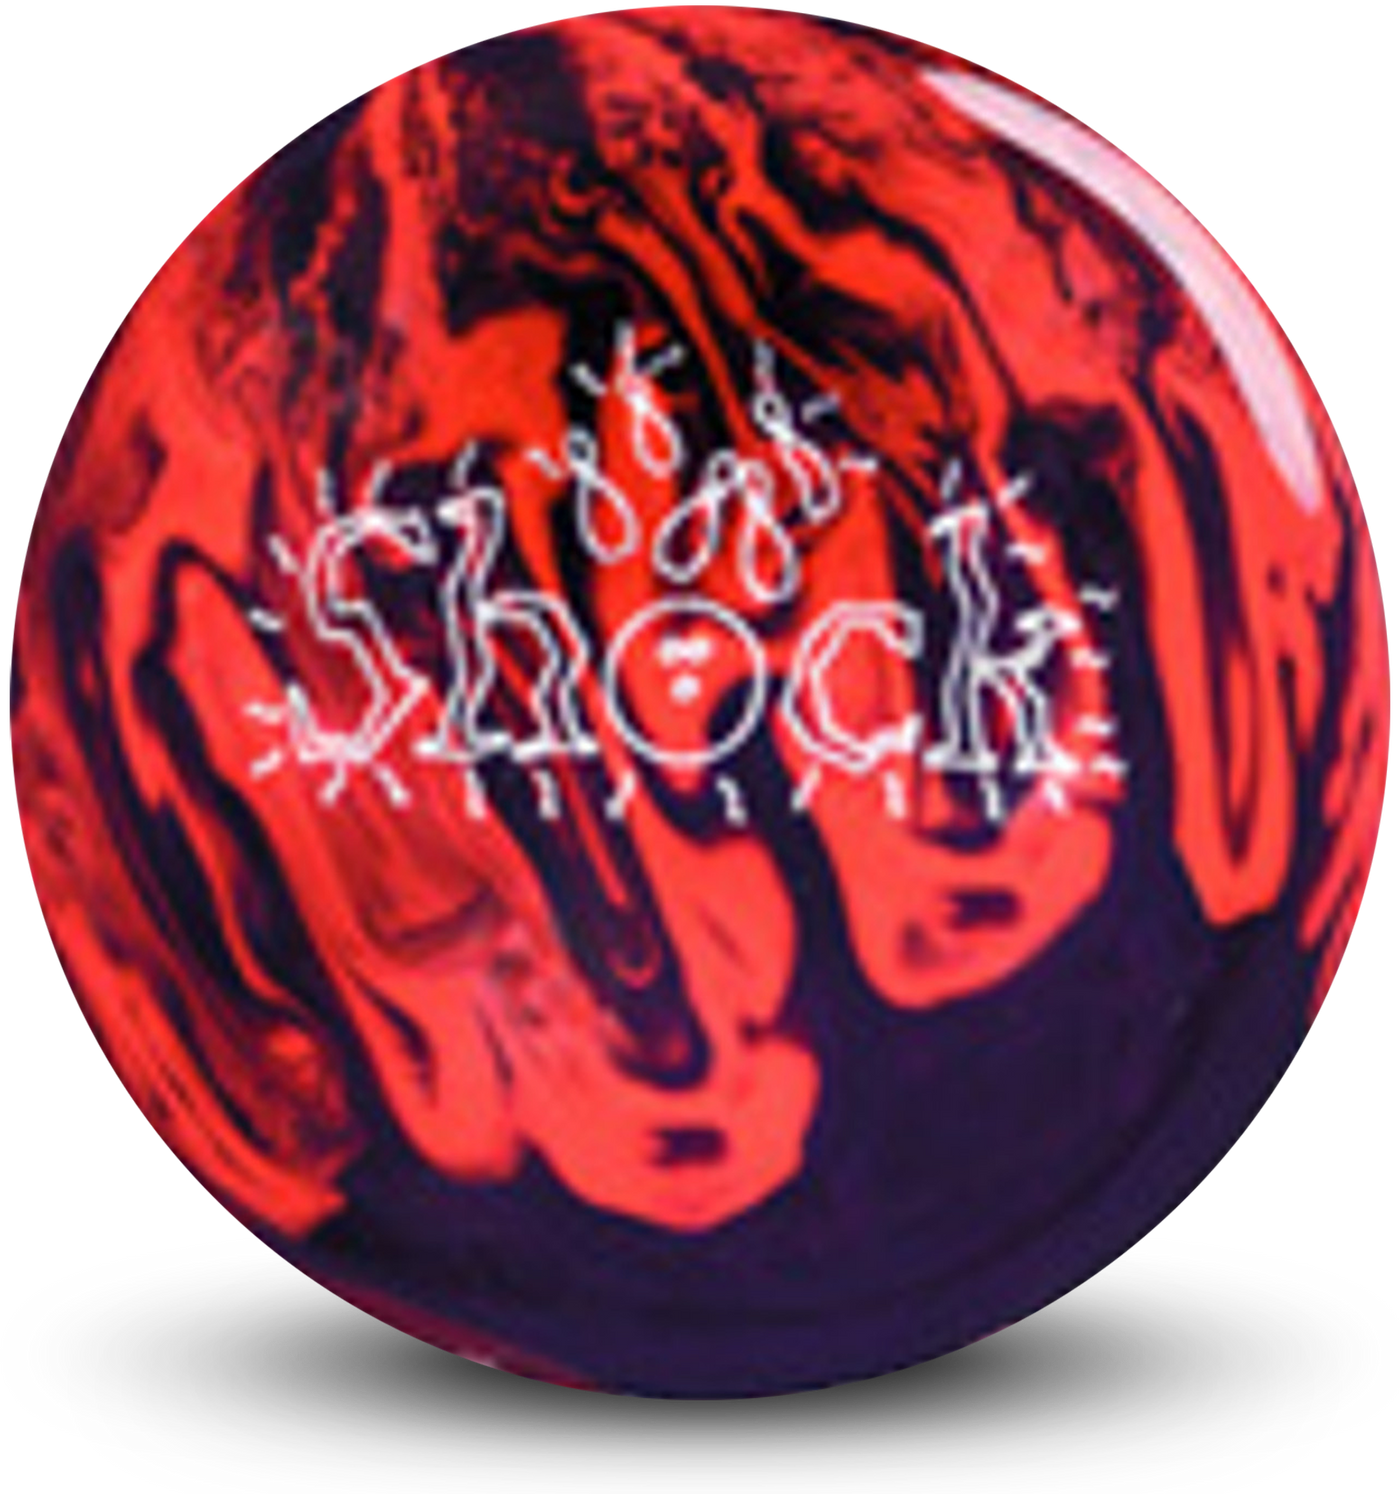 Shock Bowling Ball